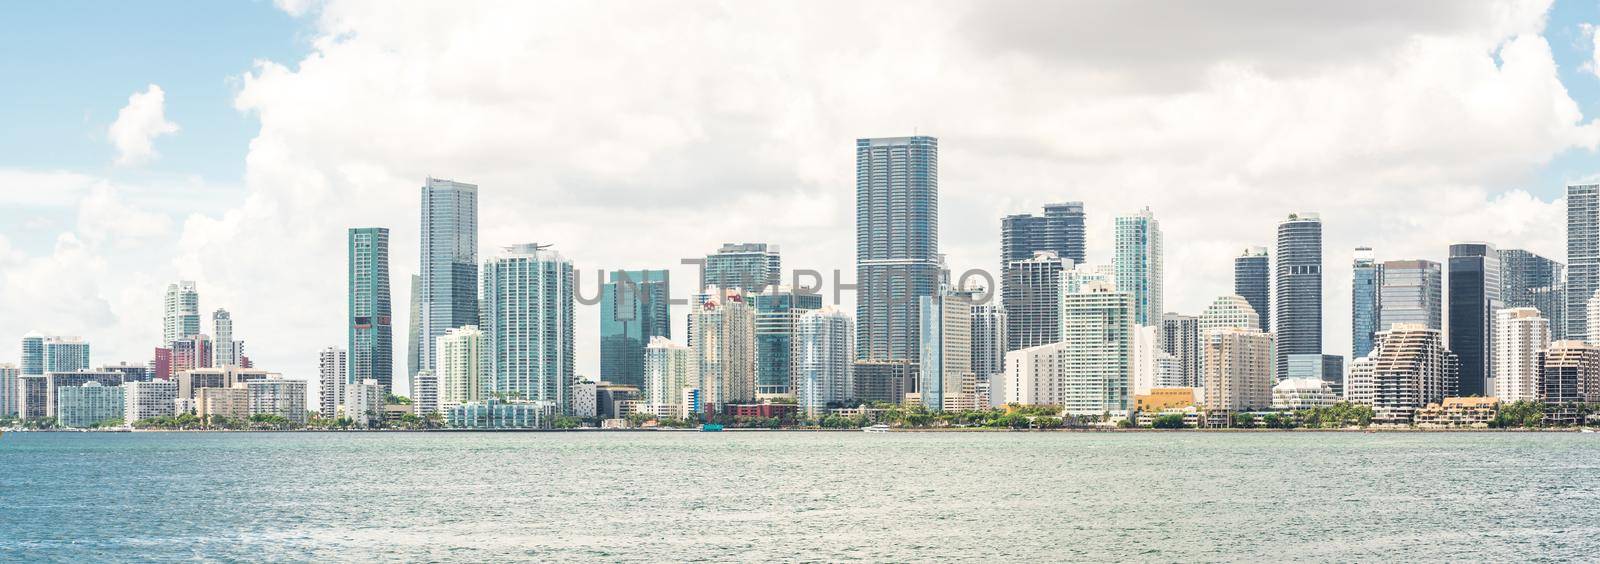 Miami Downtown skyline in daytime with Biscayne Bay by Mariakray